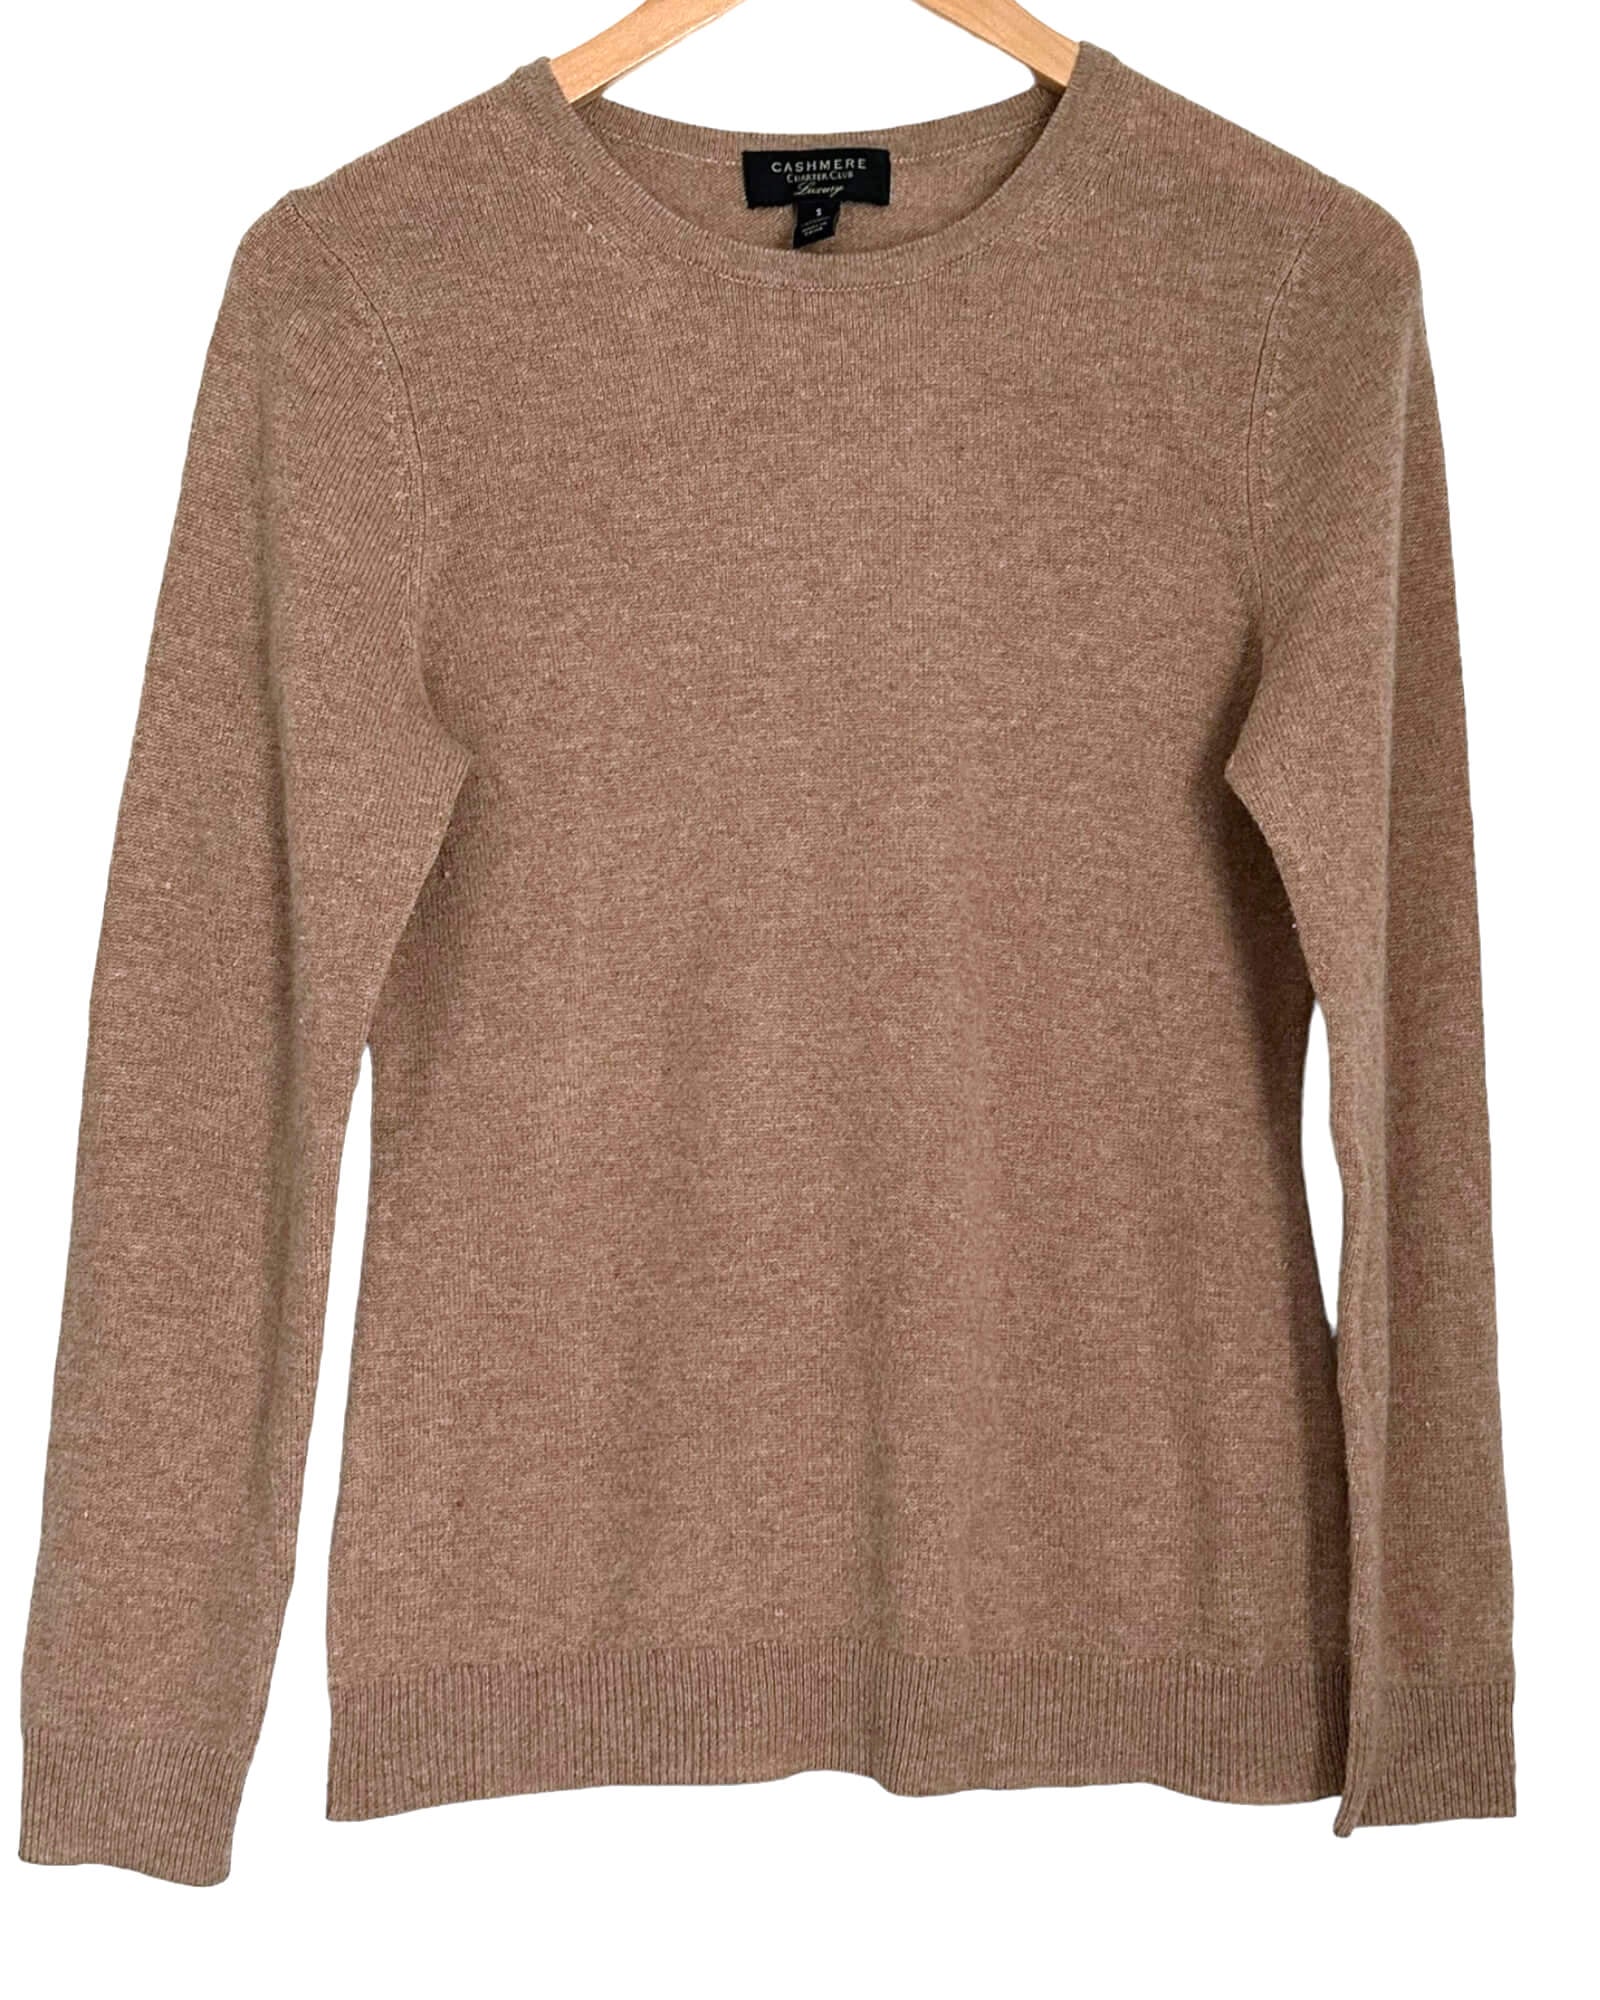 Soft Autumn CHARTER CLUB sandhill tan cashmere crewneck sweater